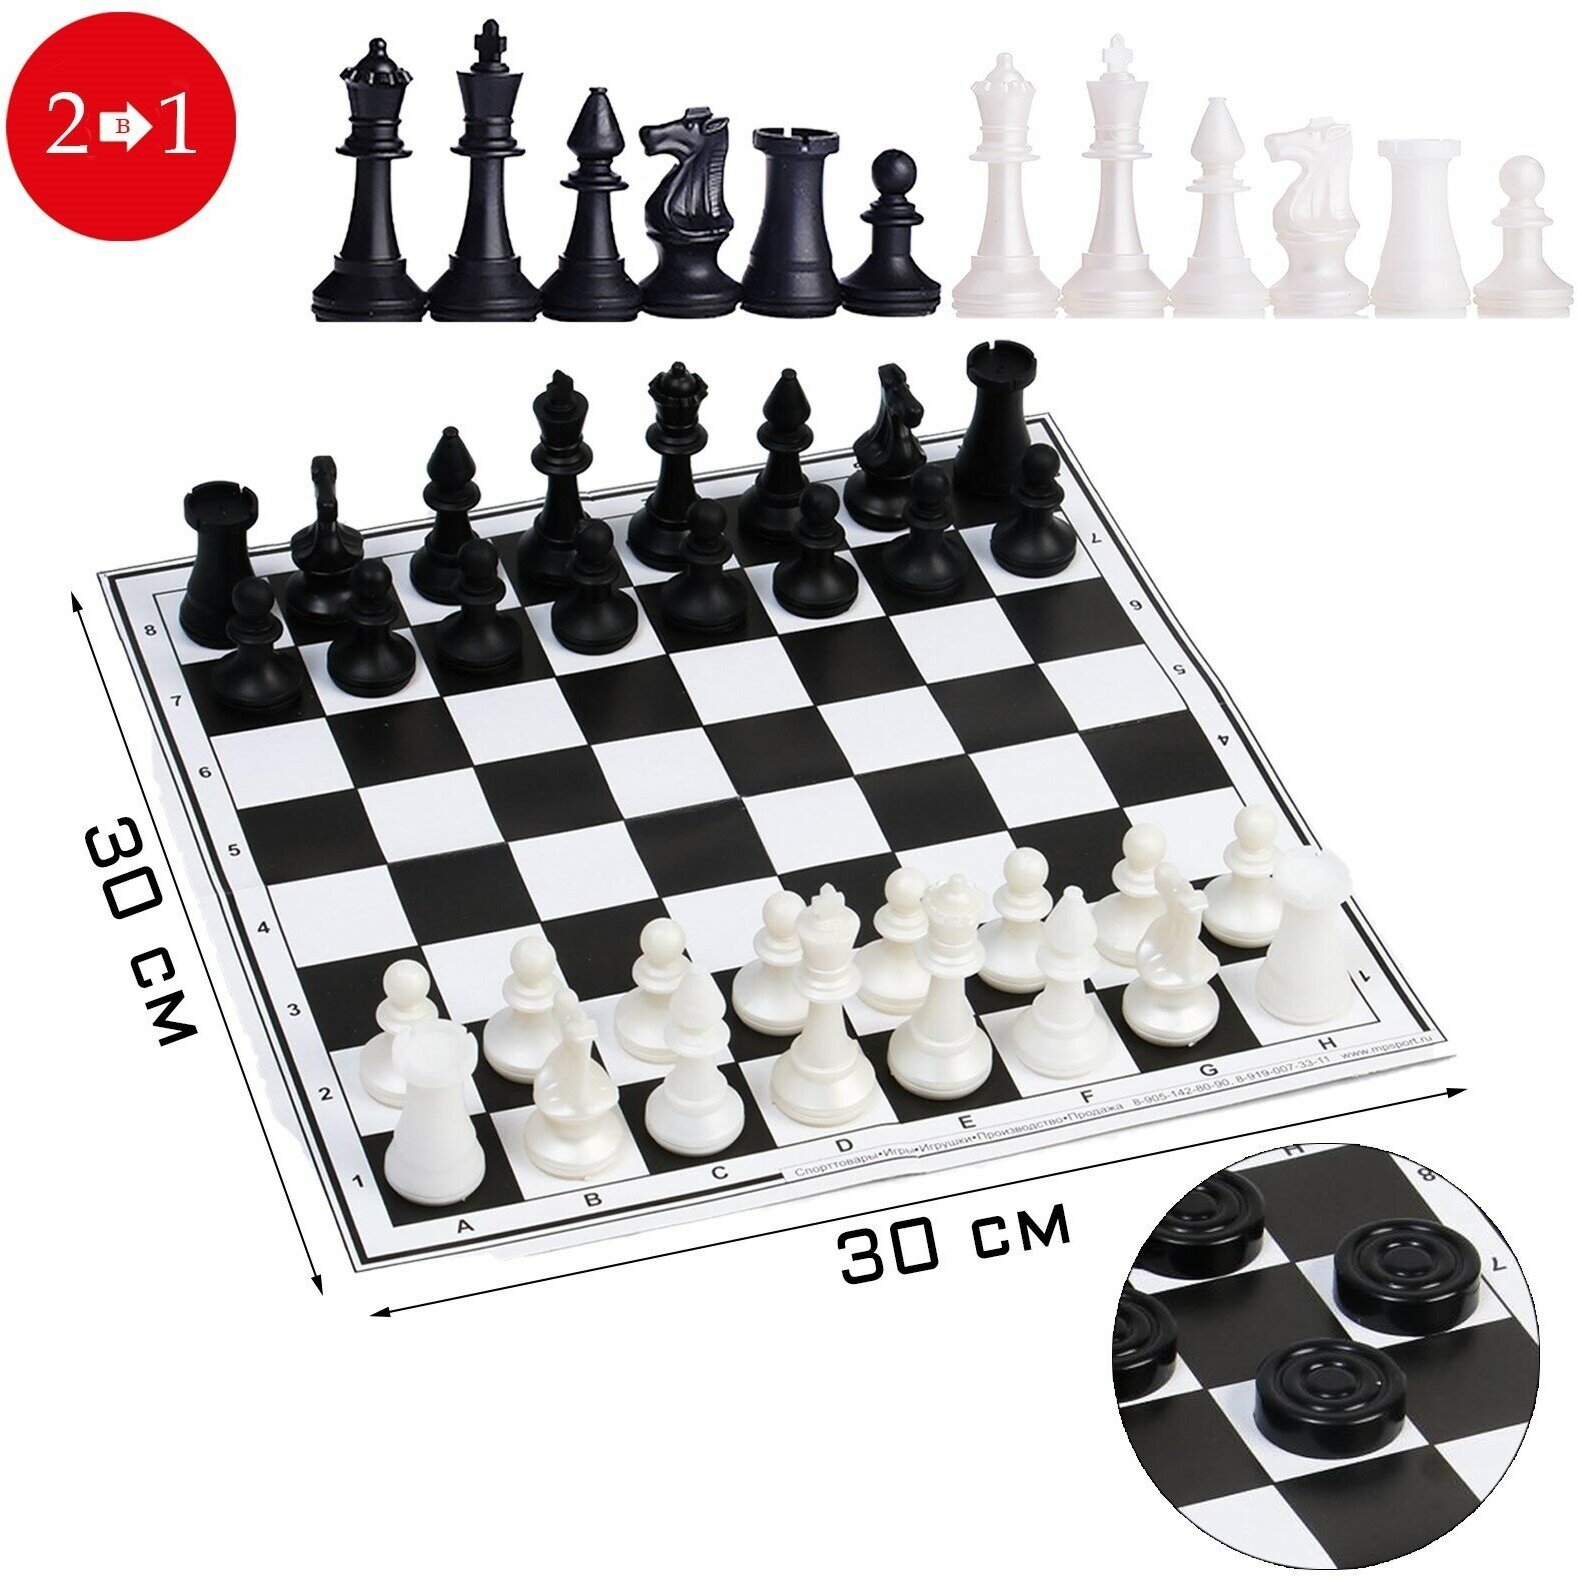 Набор шахматы и шашки, шахм. поле, фигуры пластик, король h=7 см, пешка h=4 см, d шашки=2.9 см